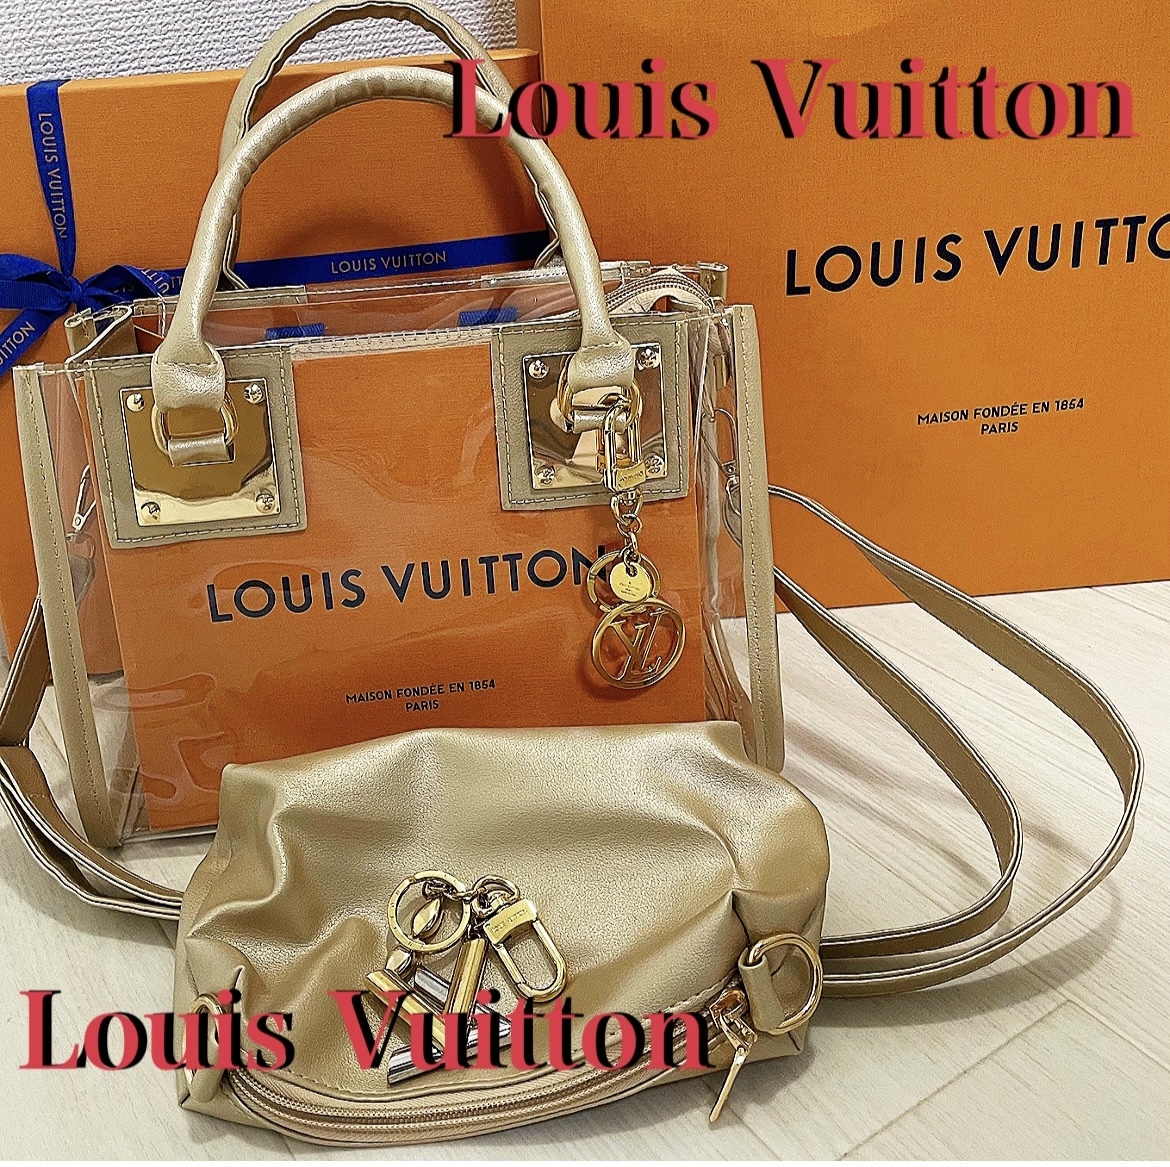 ★☆★☆Louis Vuitton★☆★☆ルイヴィトン VUITTONショップ袋 ショッパー 新品クリアバッグゴールド Louis Vuitton★☆★☆★